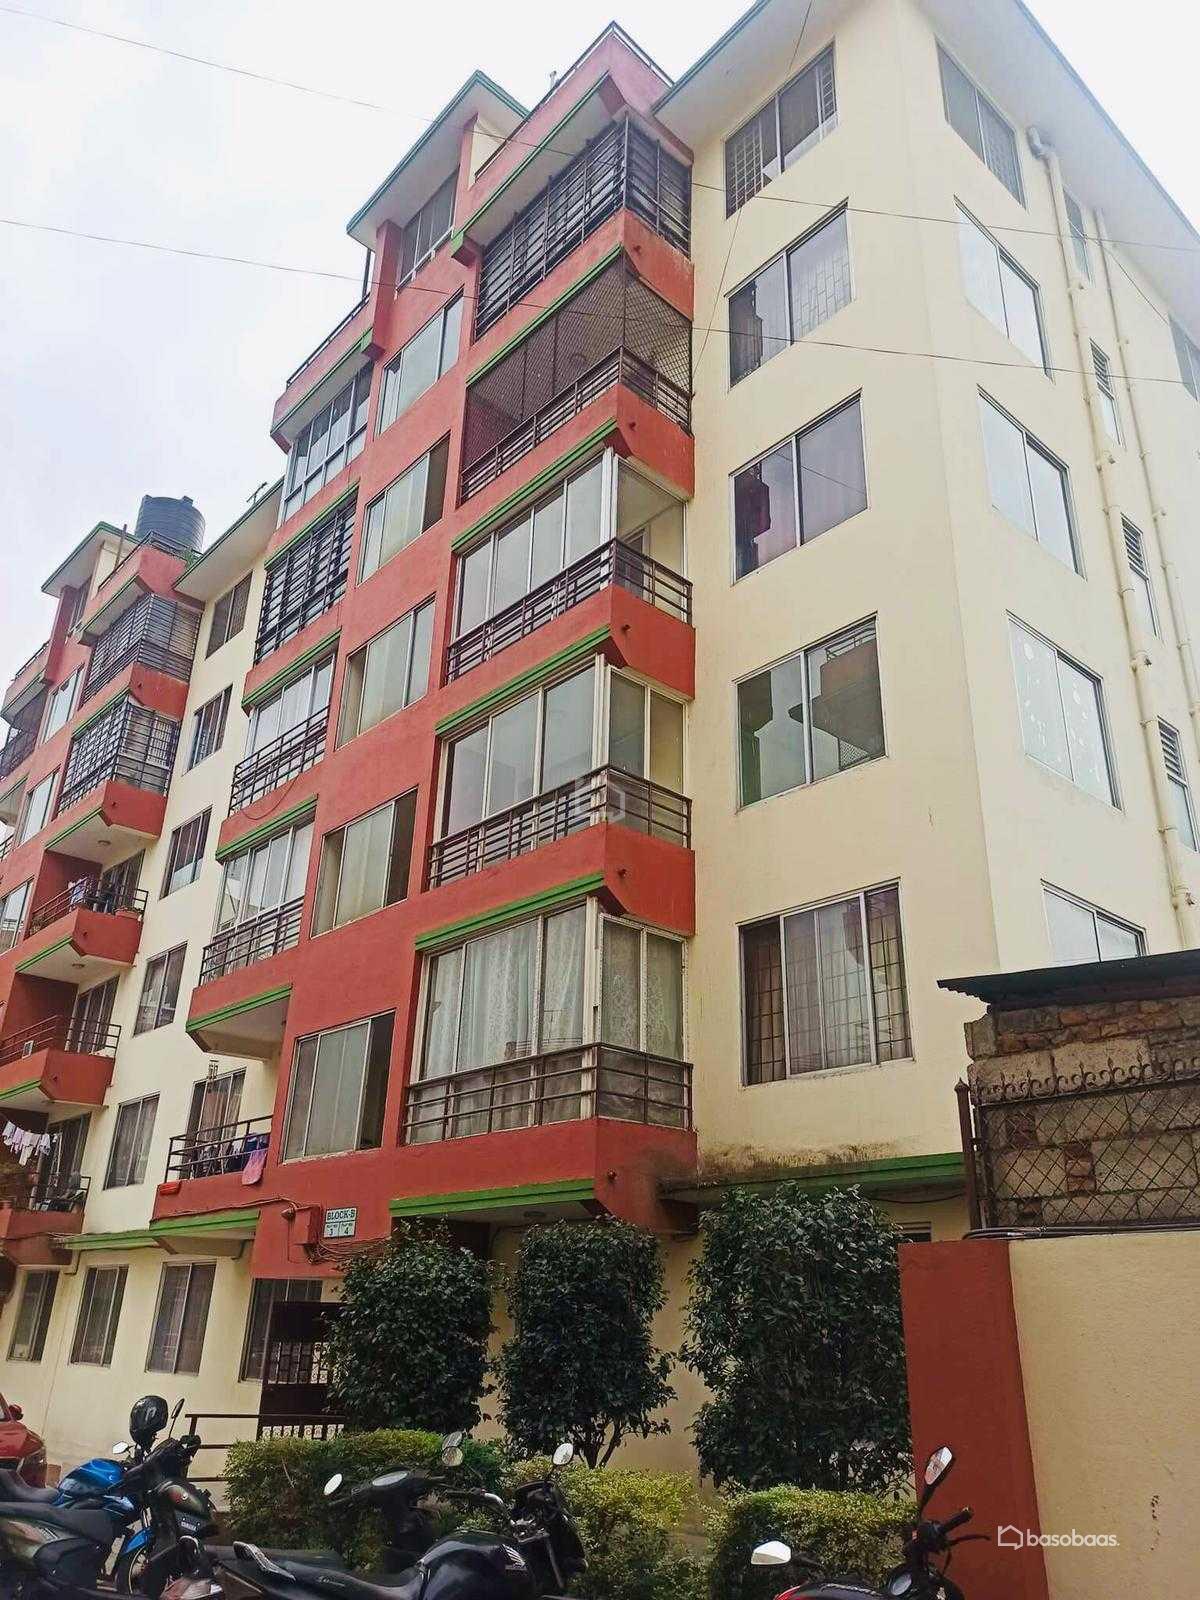 Dhumbarahi Apartment : Apartment for Sale in Dhumbarahi, Kathmandu Image 1